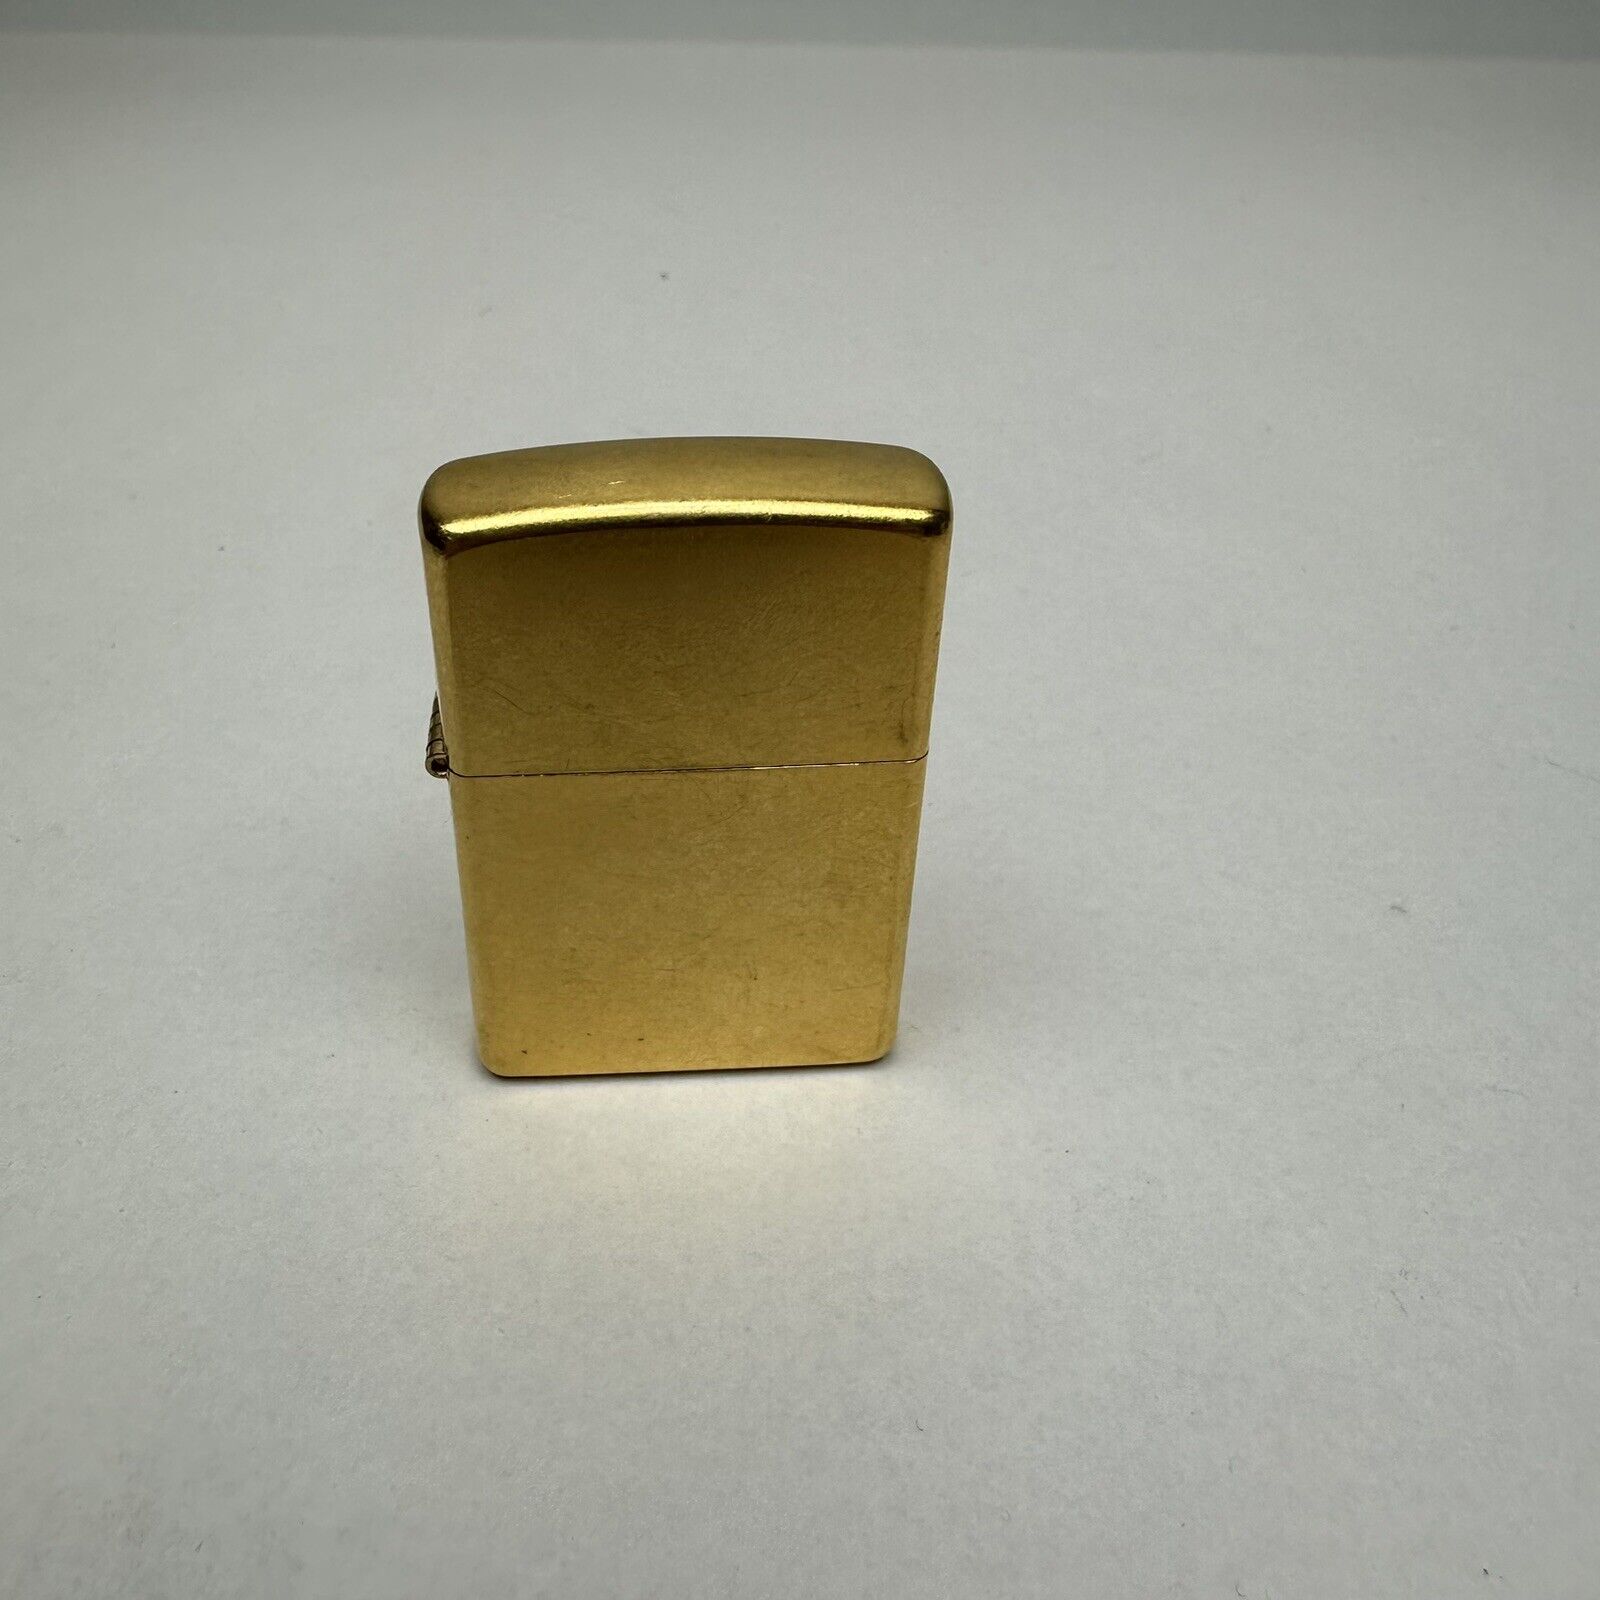 2003 Gold Plated Zippo Lighter w/ Gold Insert Textured